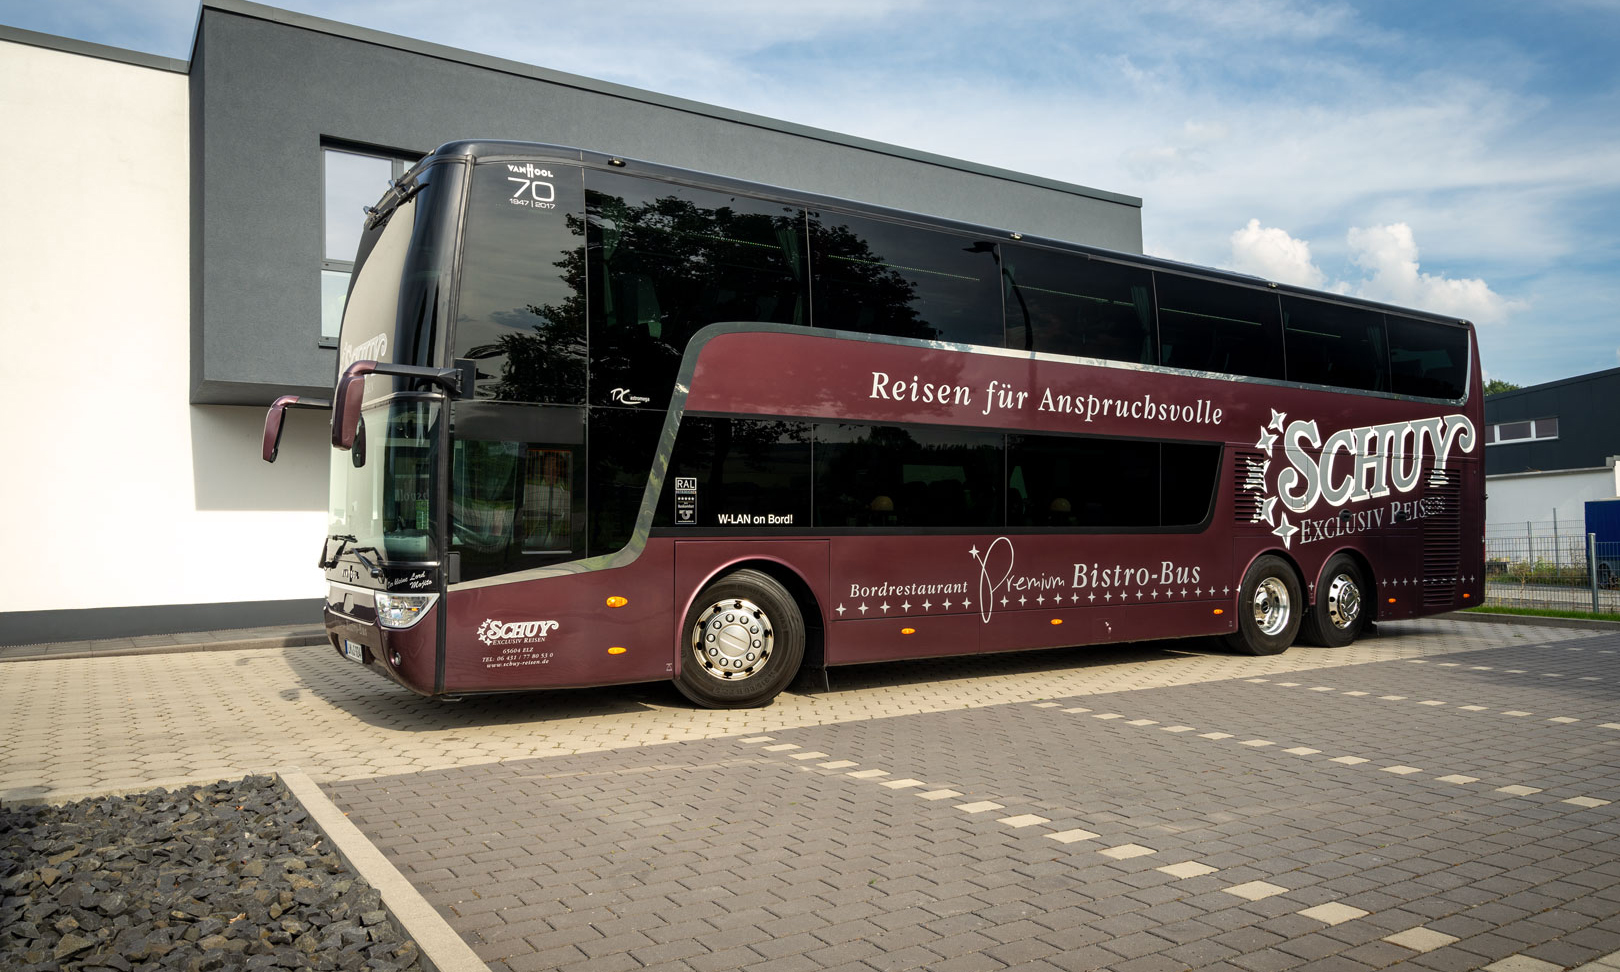 Schuy Exclusiv Reisen_Bistro-Bus_5 Premium Bistro Bus Van Hool